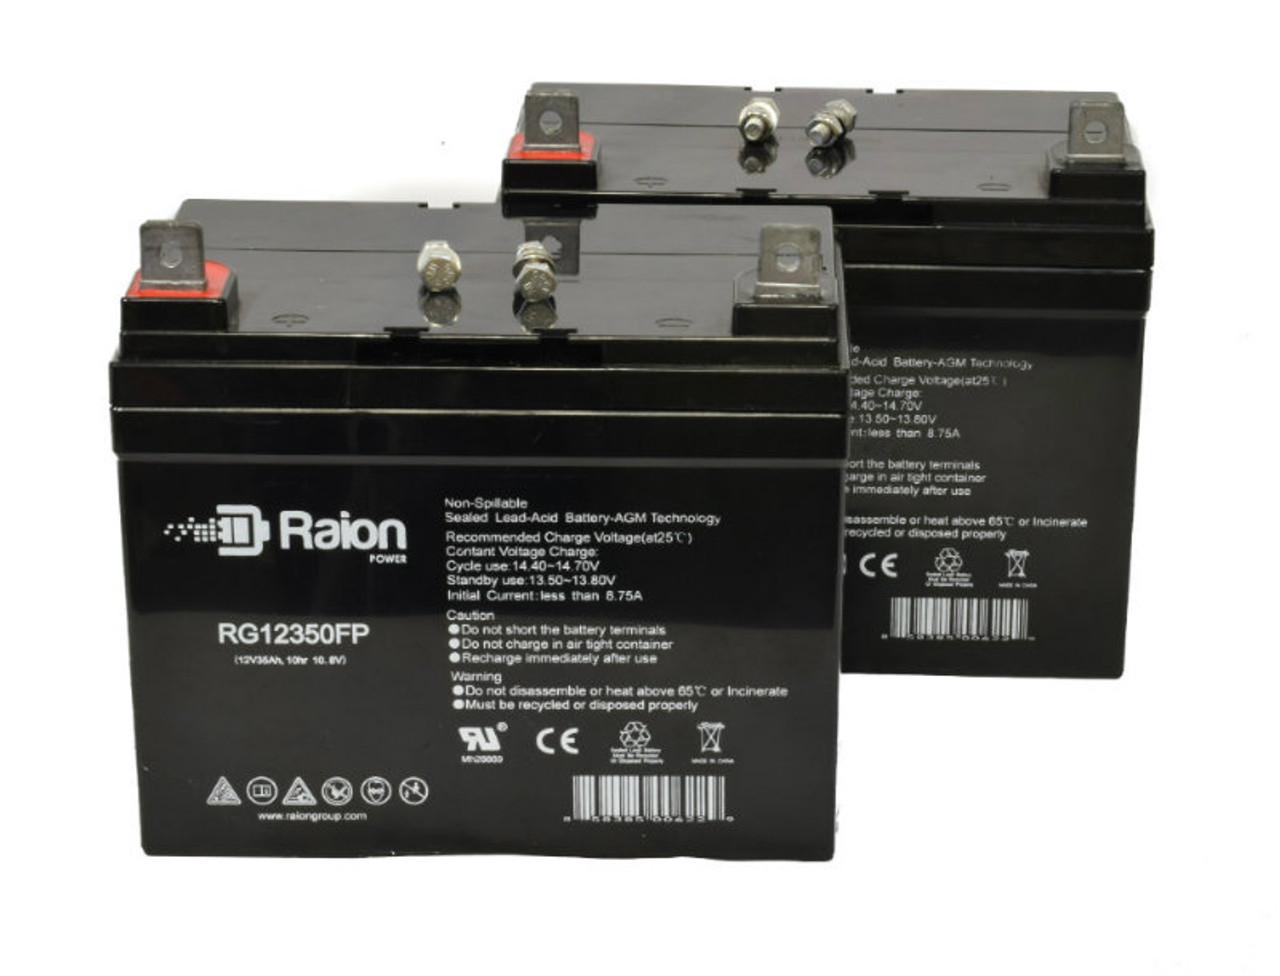 Raion Power Replacement 12V 35Ah Lawn Mower Battery for Kubota B5100 - 2 Pack